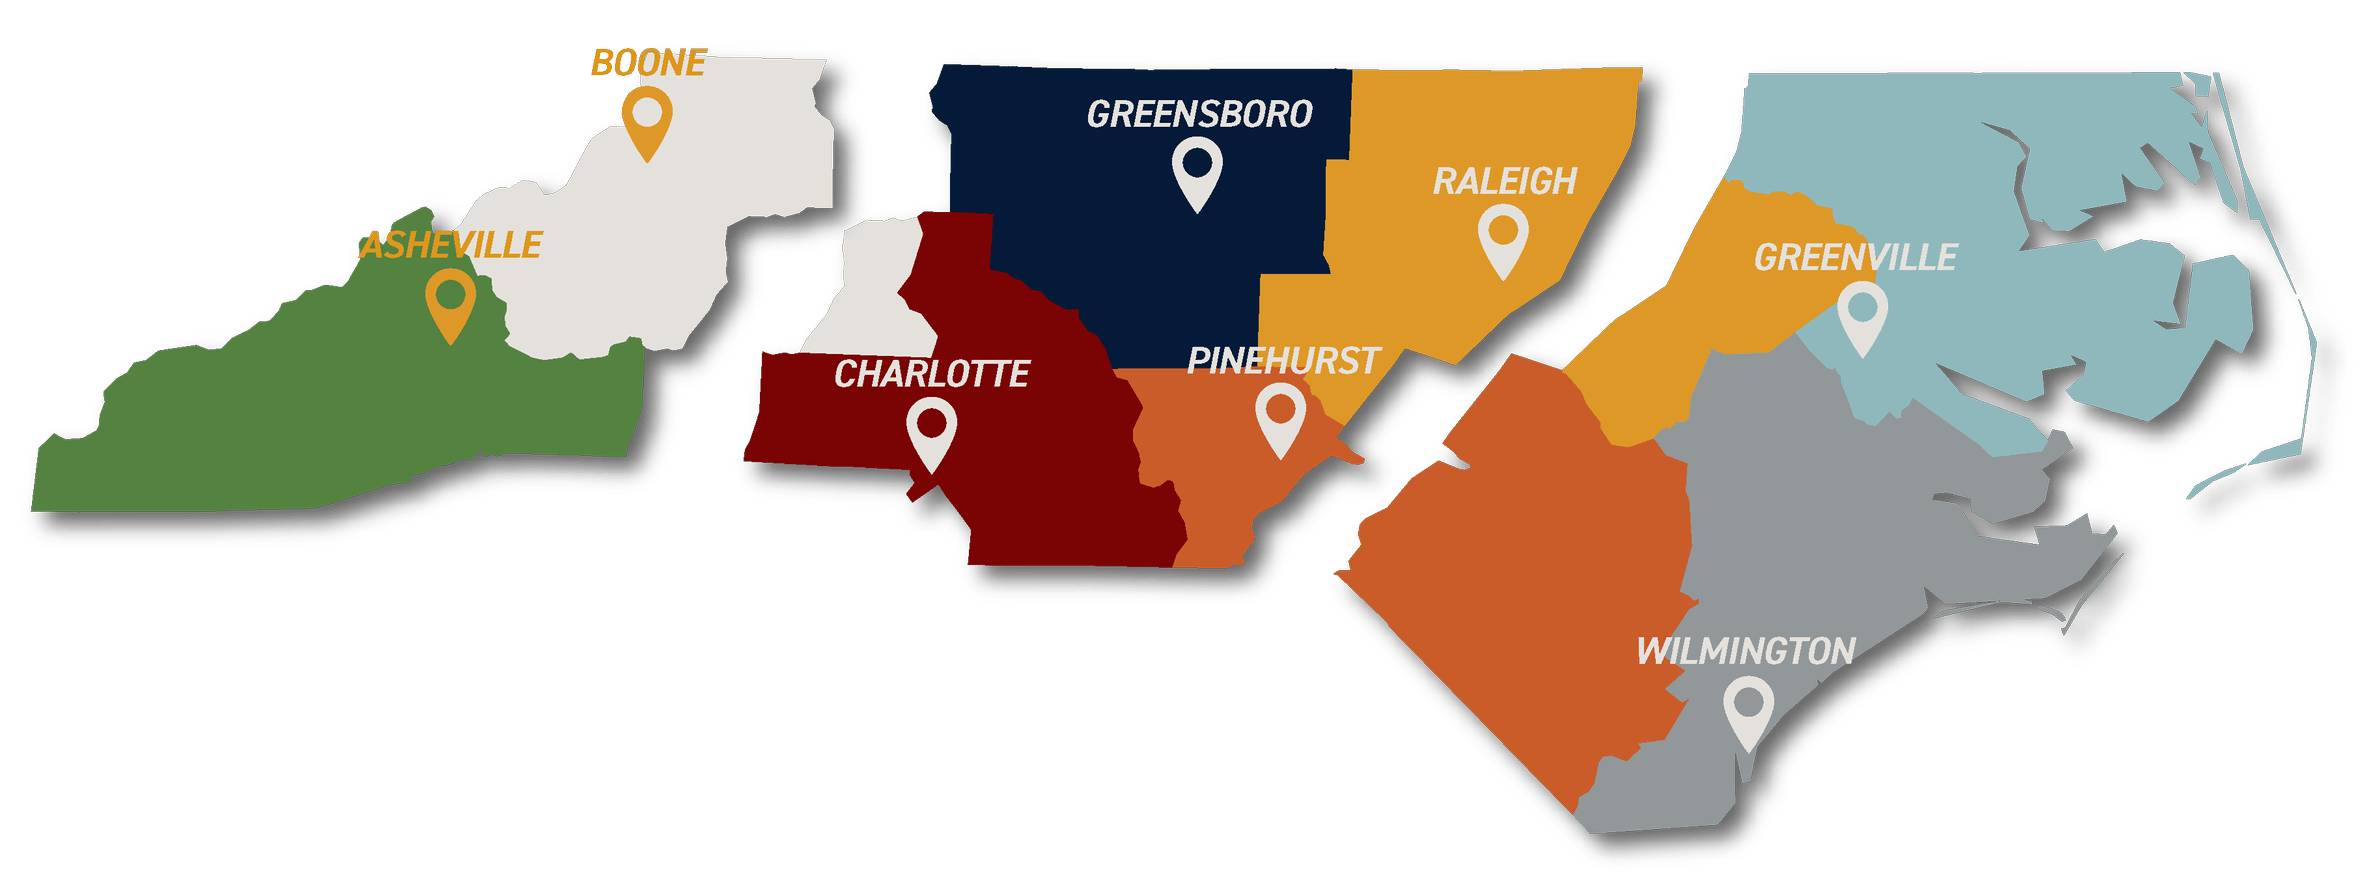 Map showing North Carolina regions